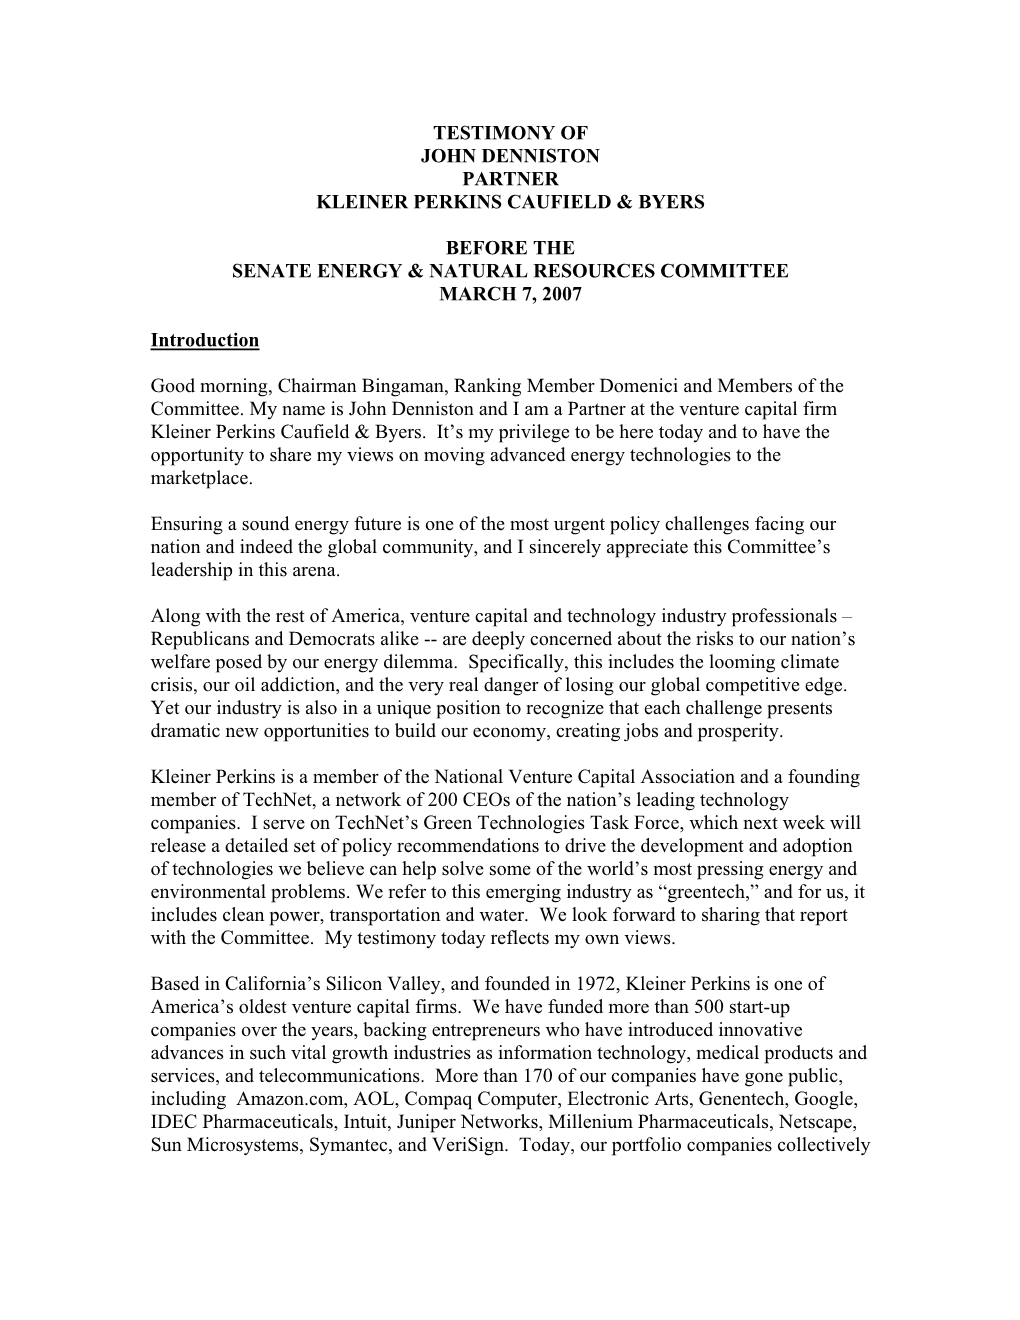 Testimony of John Denniston Partner Kleiner Perkins Caufield & Byers Before the Senate Energy & Natural Resources Commit